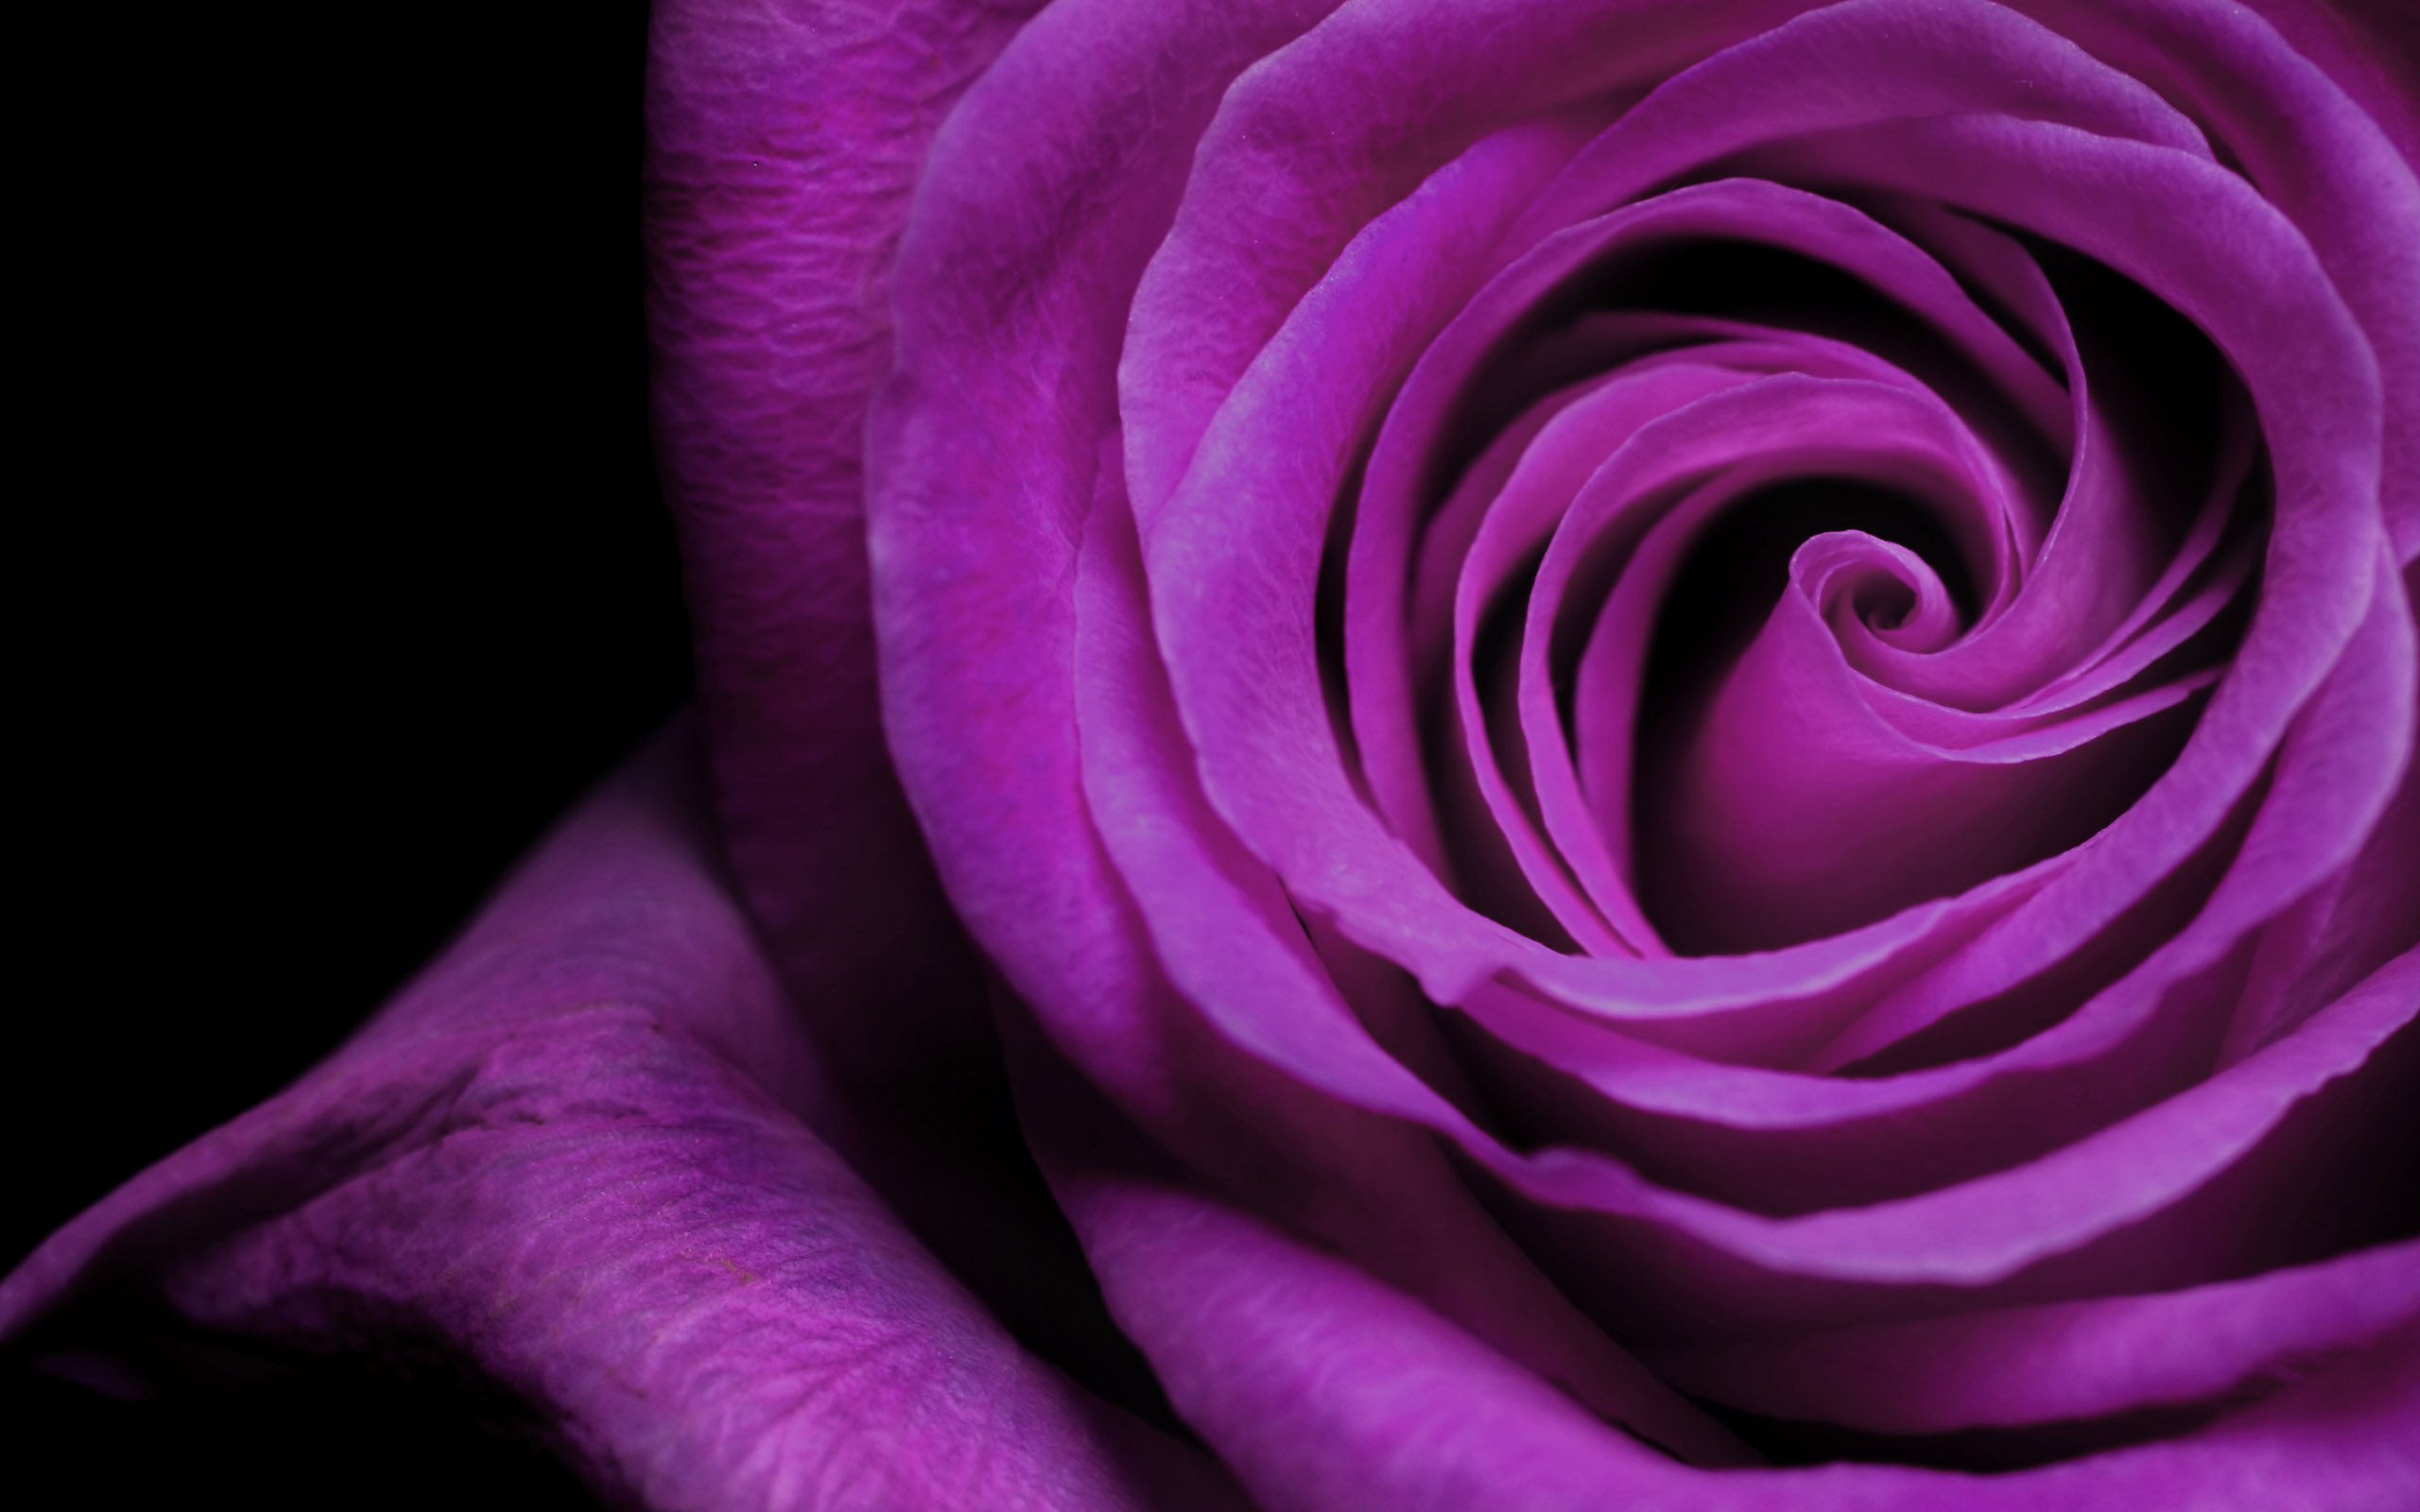 Rose flower powerpoint background